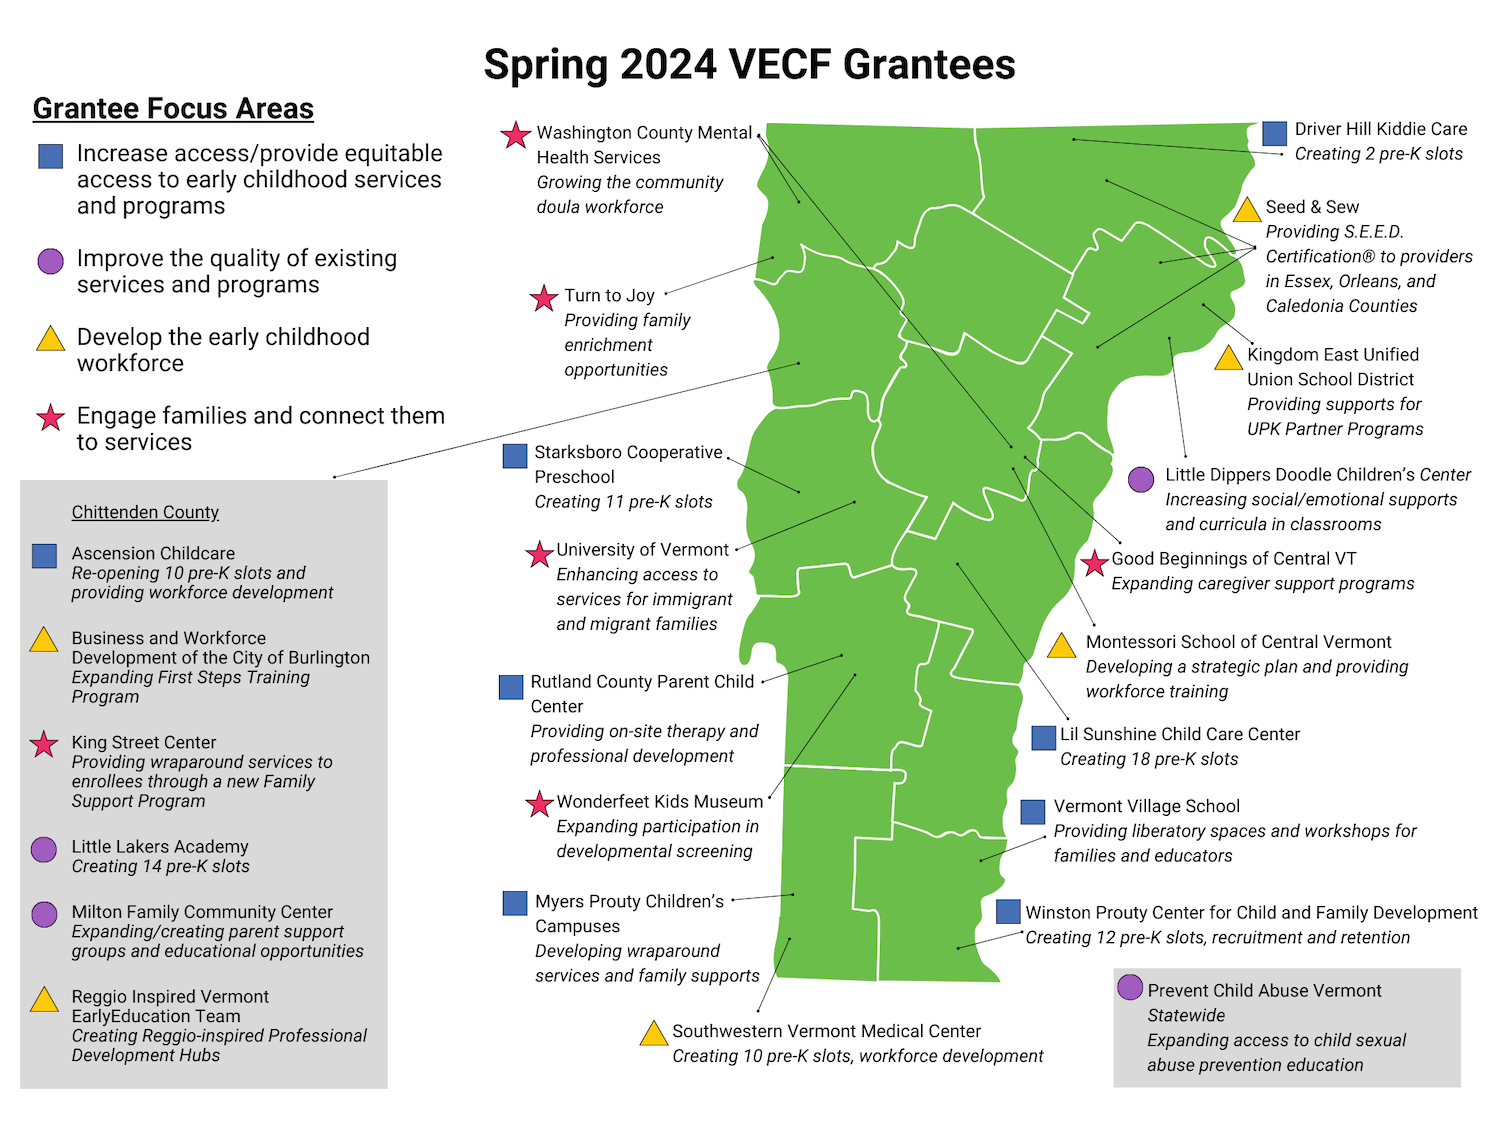 Map of spring 2024 VECF grantees